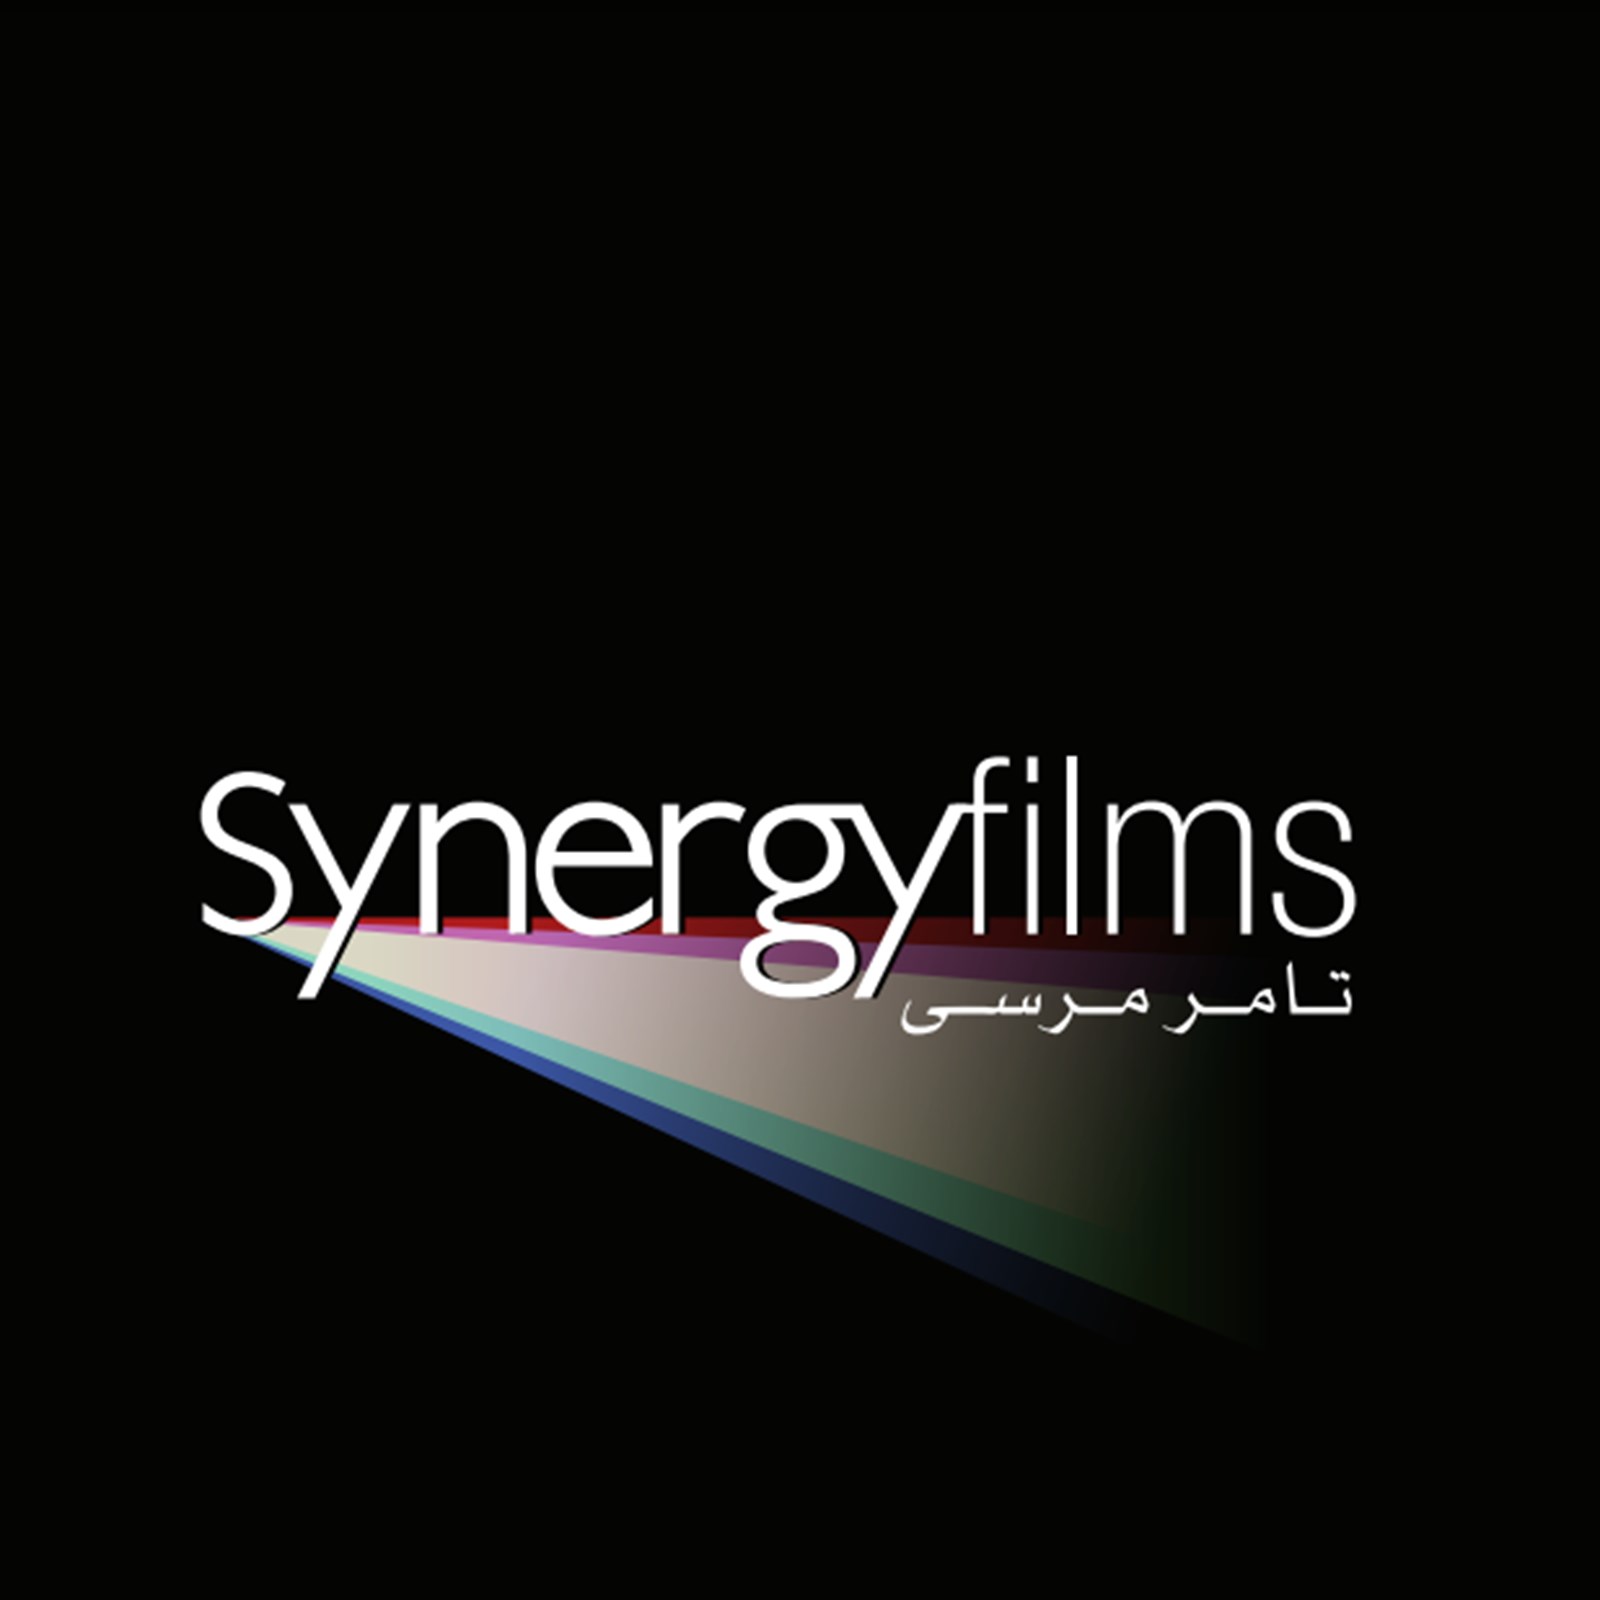 Synergy Films